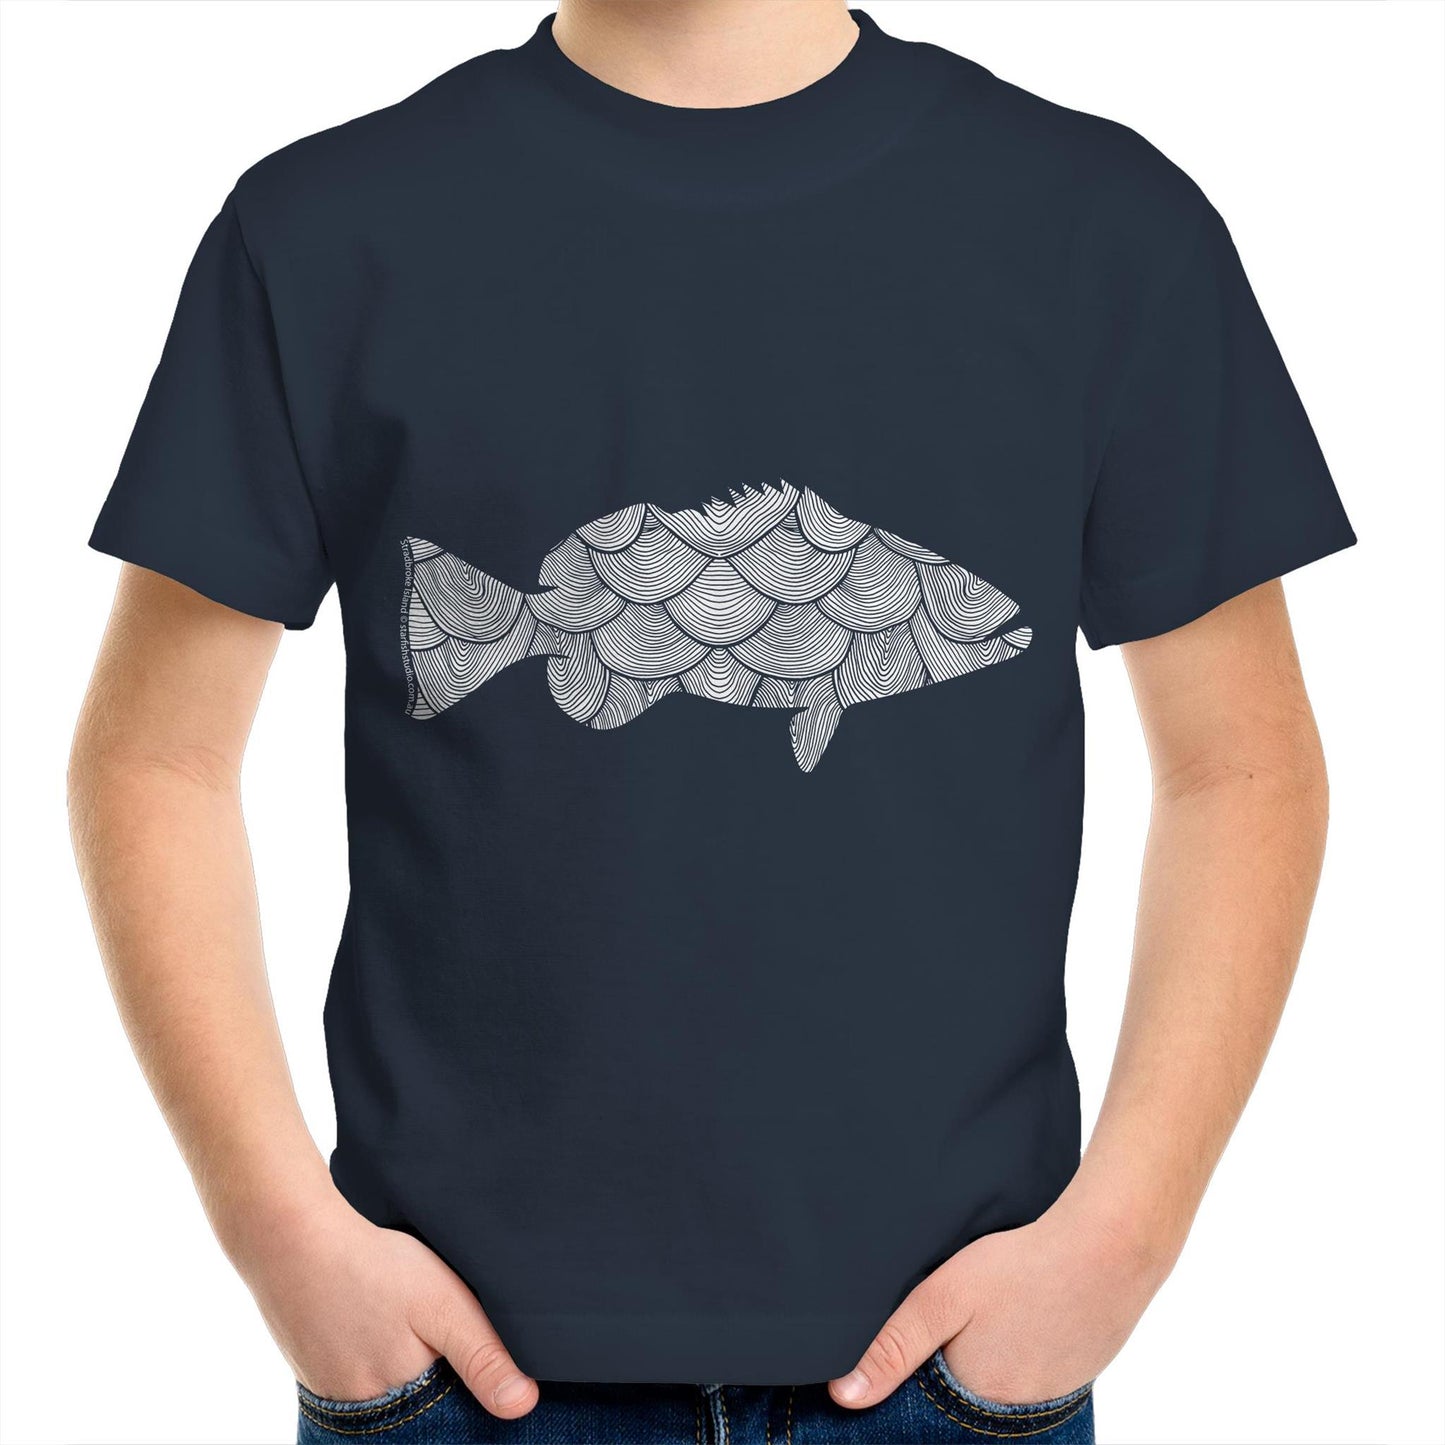 CUSTOM Kids  COD FISH  T-Shirt